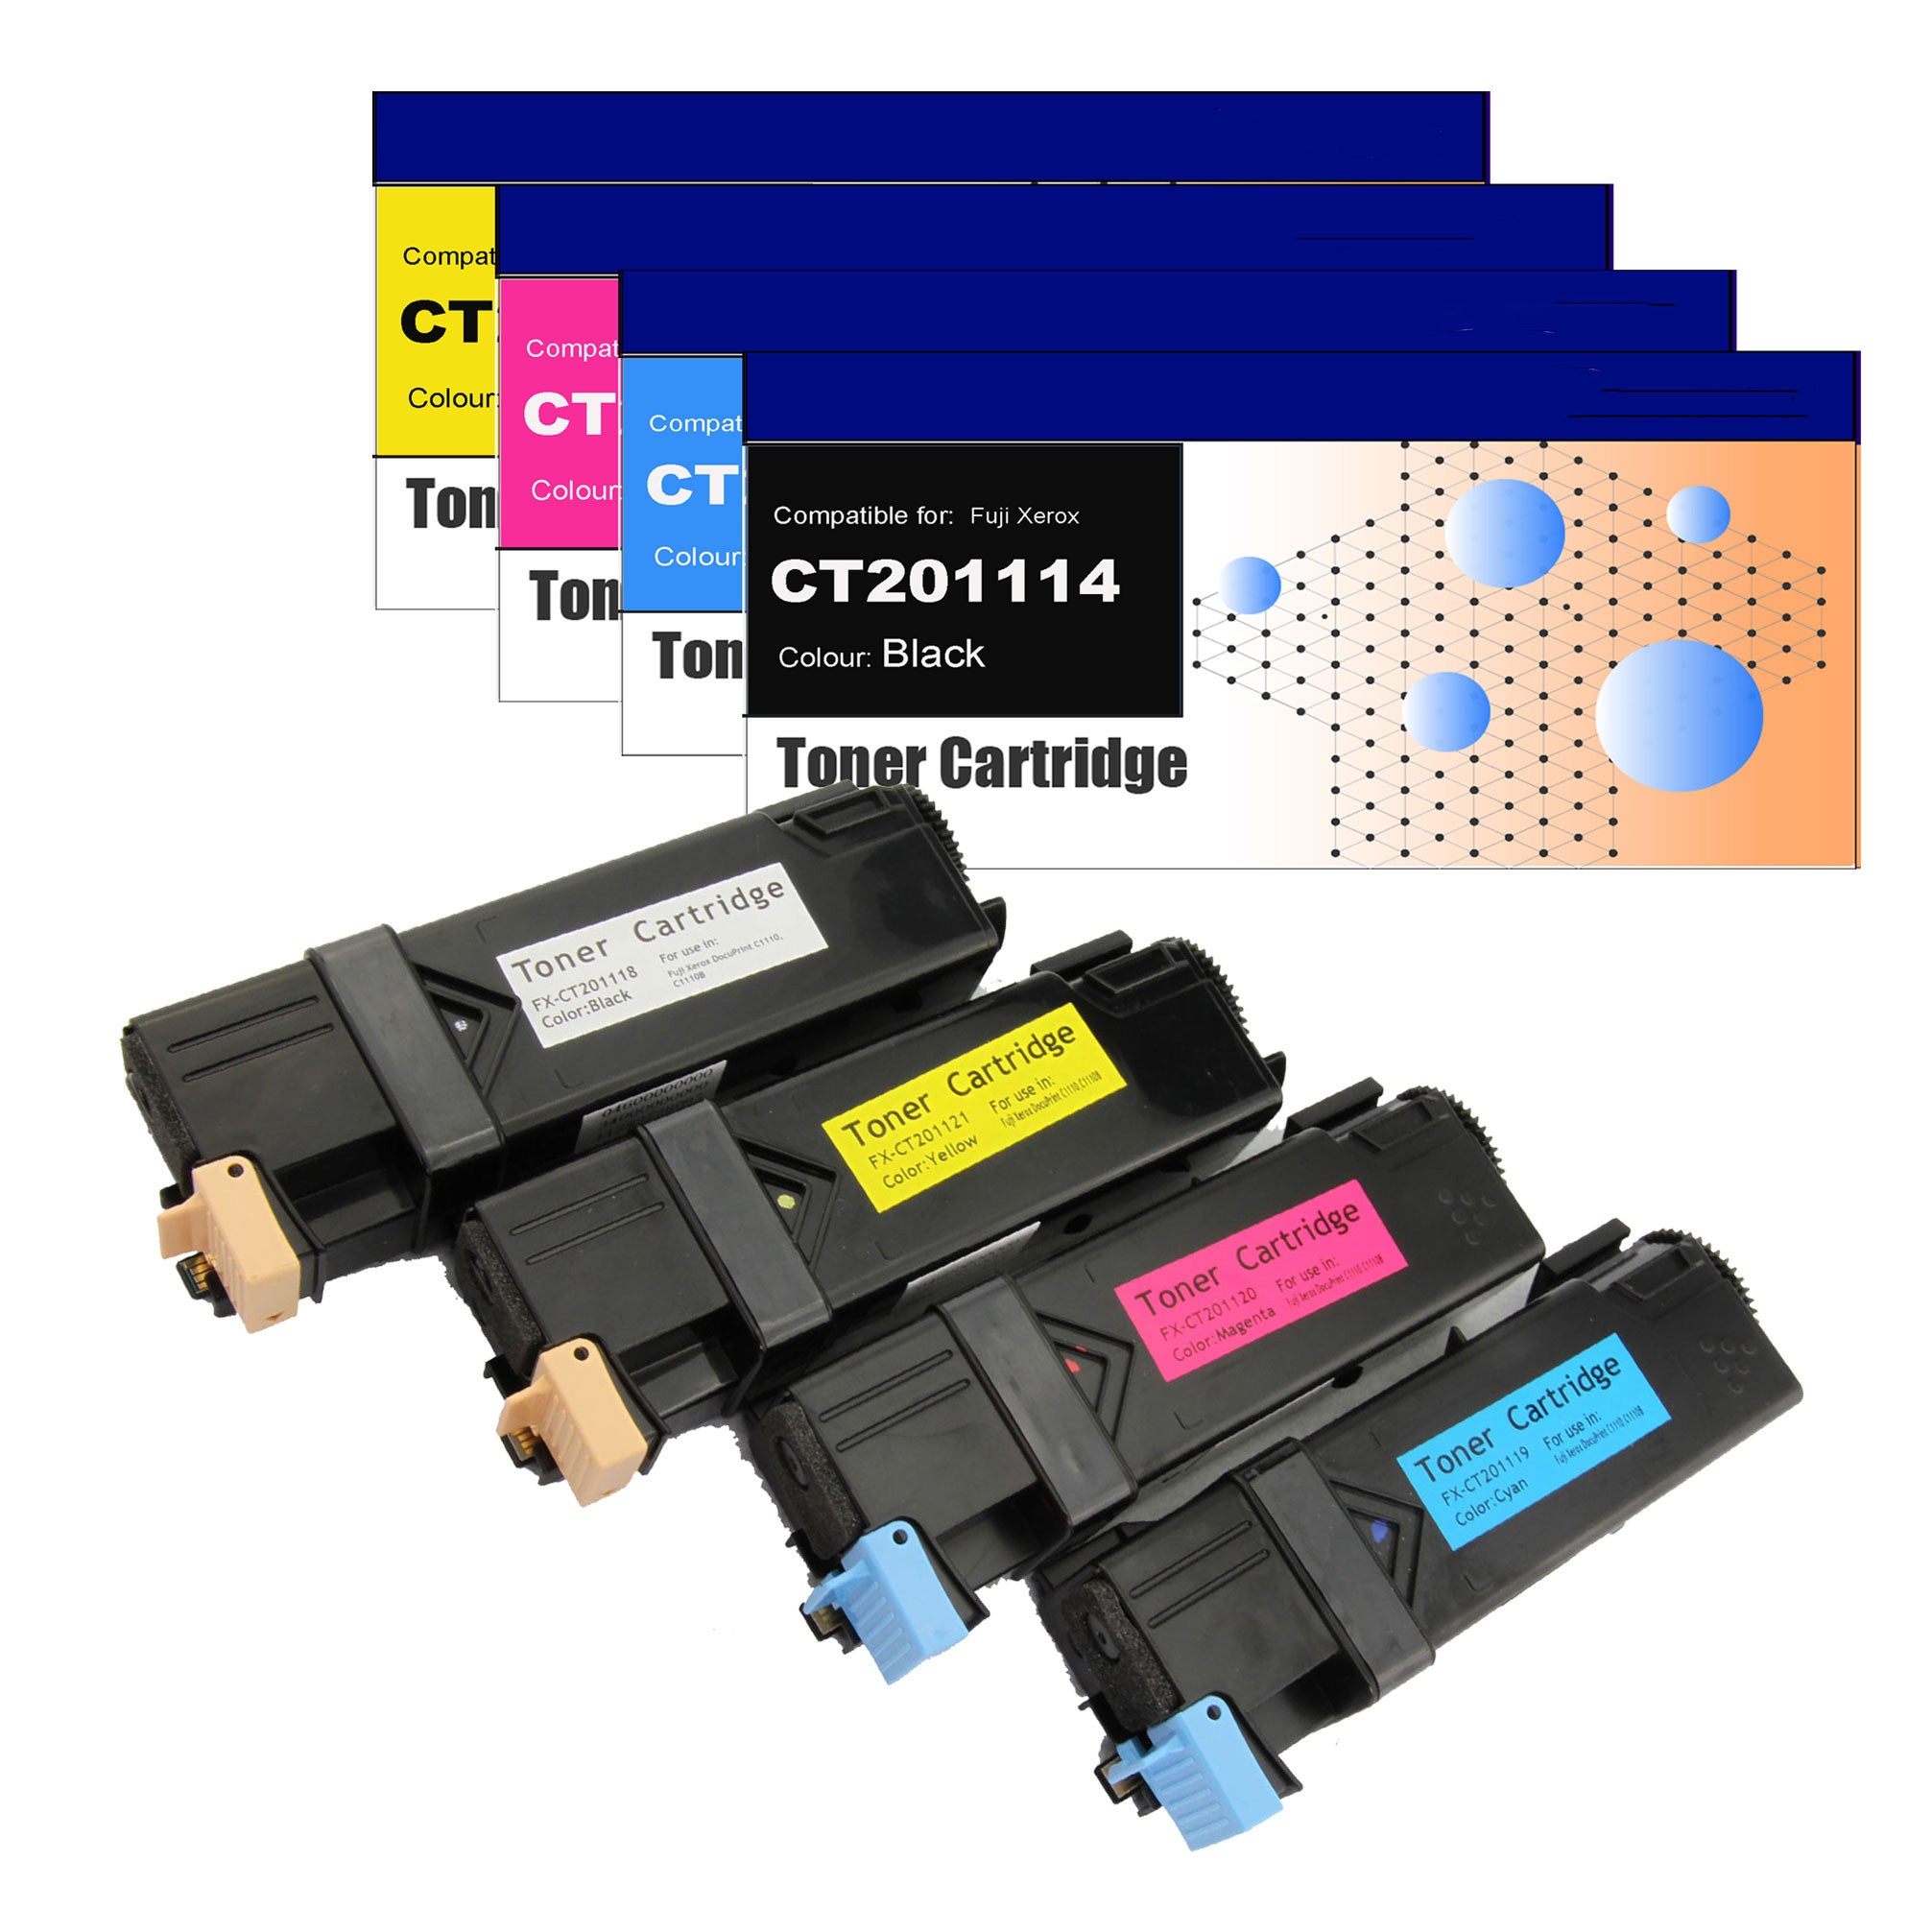 Compatible Toner Cartridges for Fuji Xerox CT201114 / CT201115 / CT201116 / CT201117 (C1110)